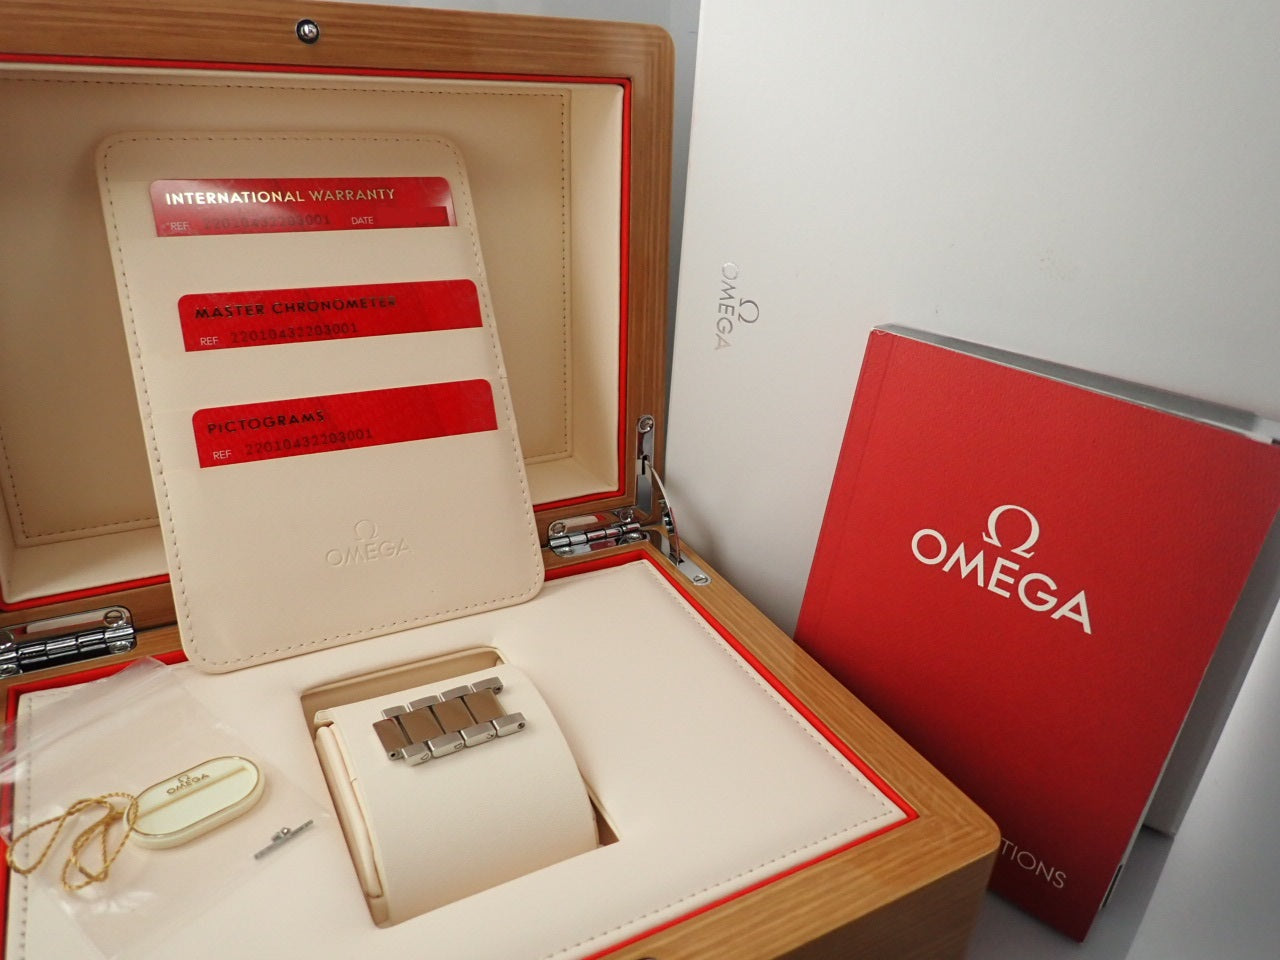 Omega Seamaster Aqua Terra 150M Co-Axial Master Chronometer GMT World Timer 43MM &lt;Warranty, Box, etc.&gt;